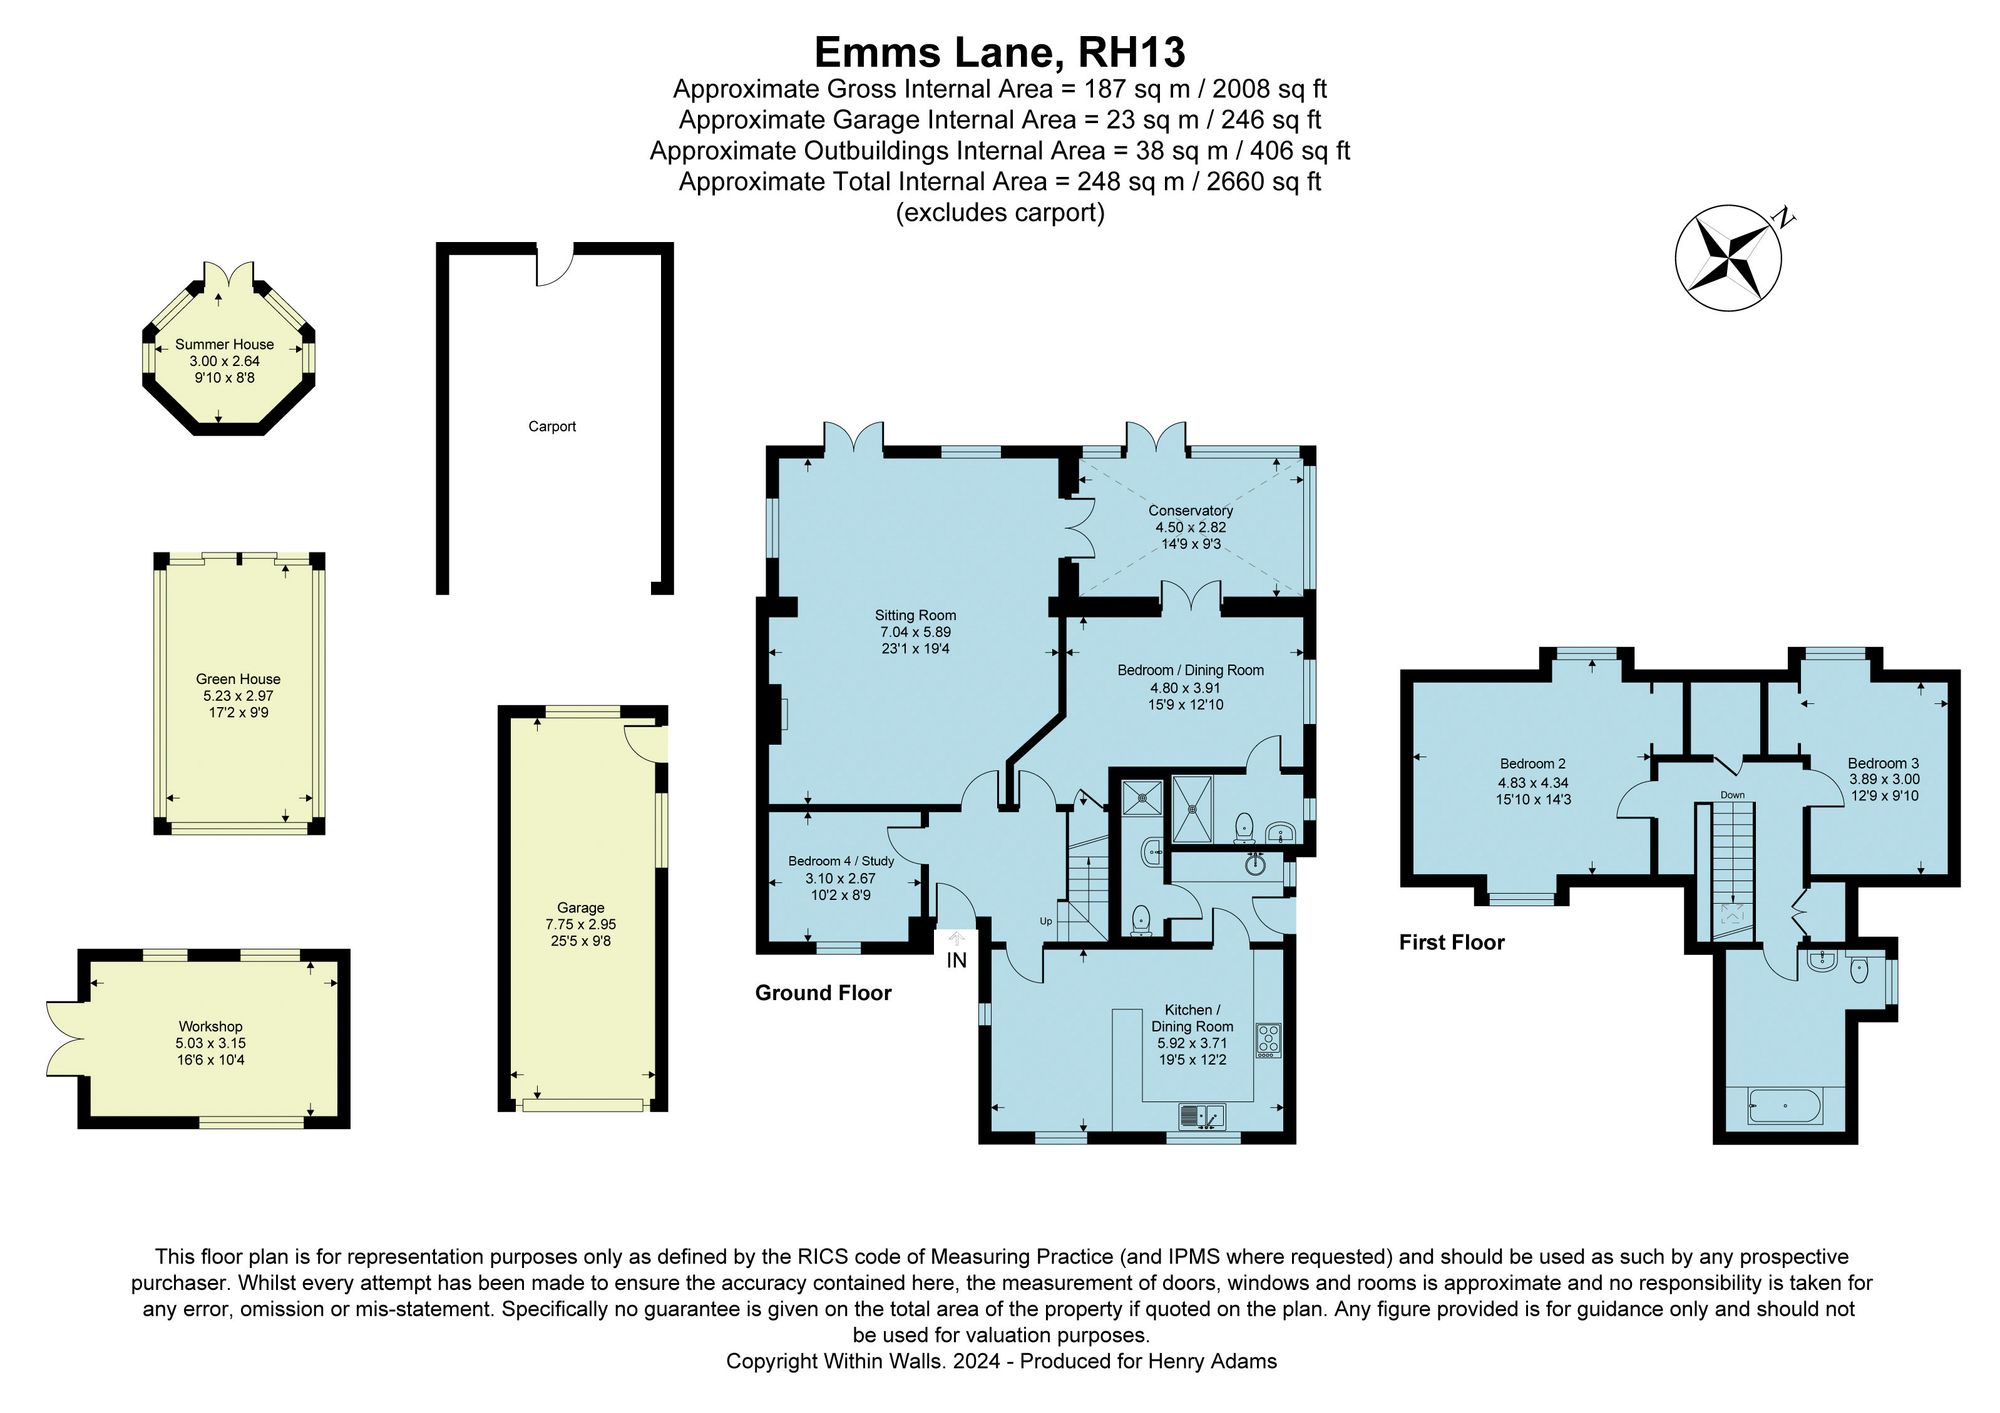 Emms Lane, Brooks Green, RH13 floorplans